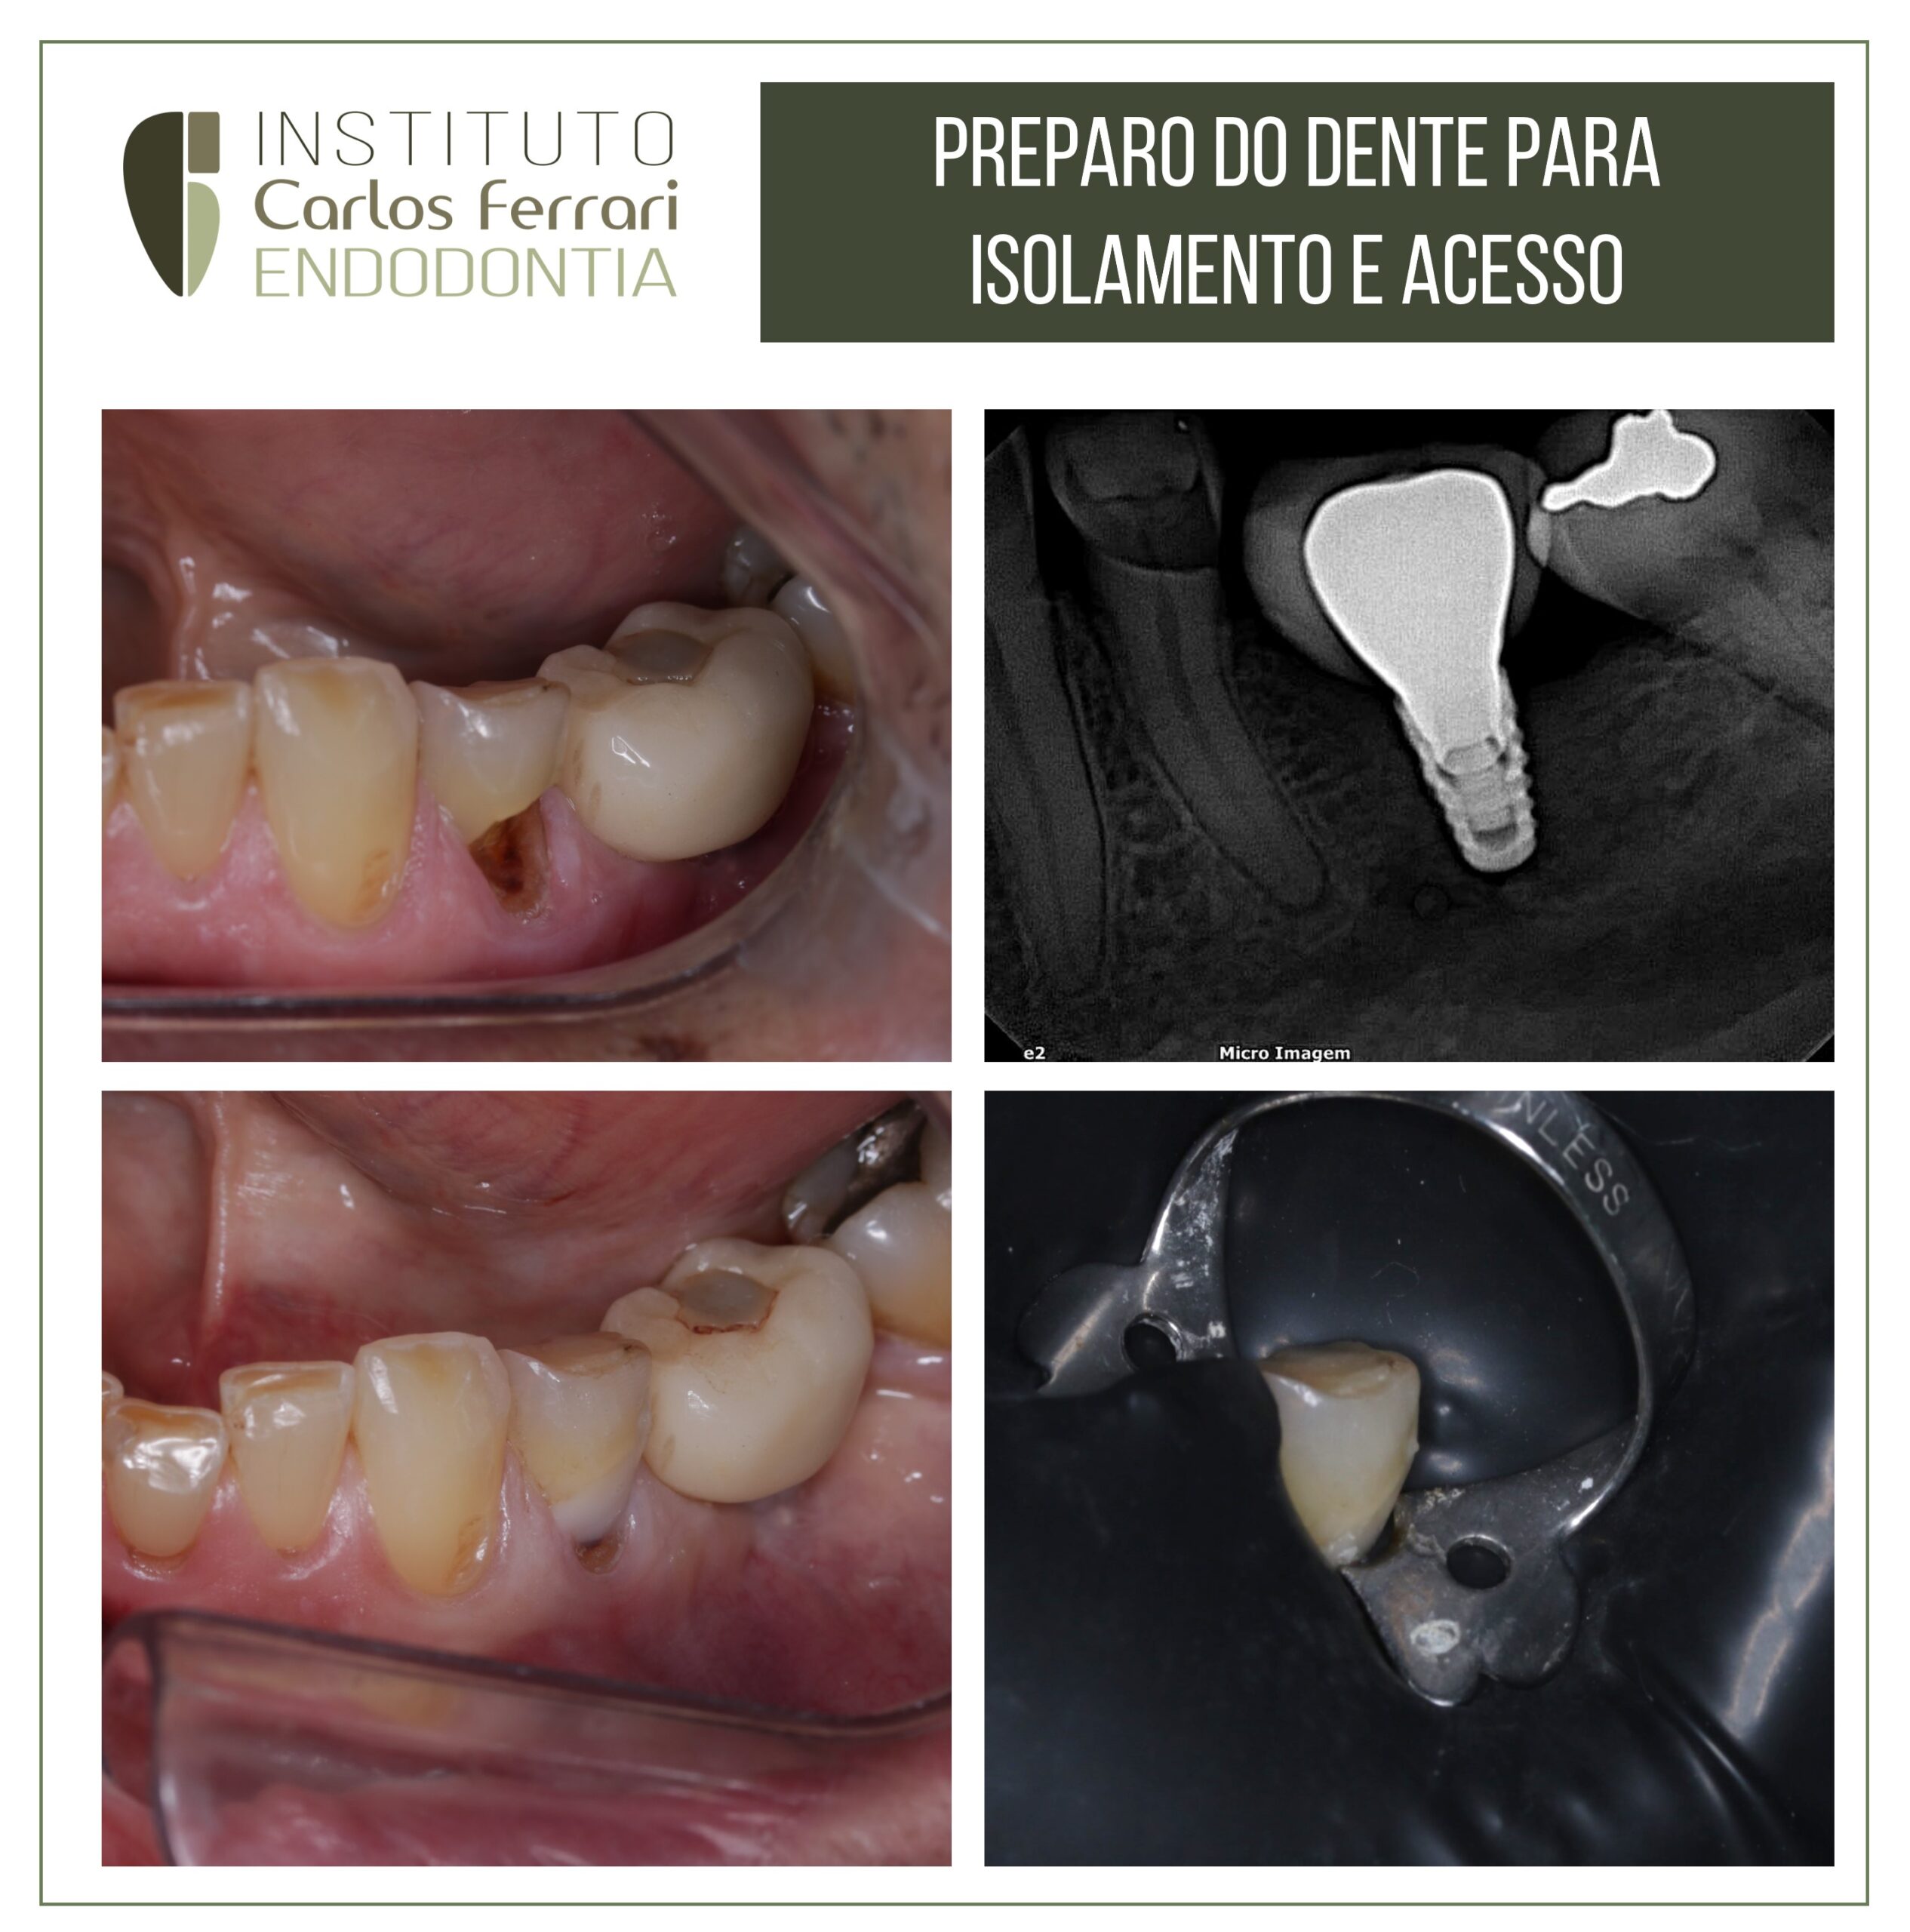 You are currently viewing Preparo do dente para isolamento e cirurgia de acesso.